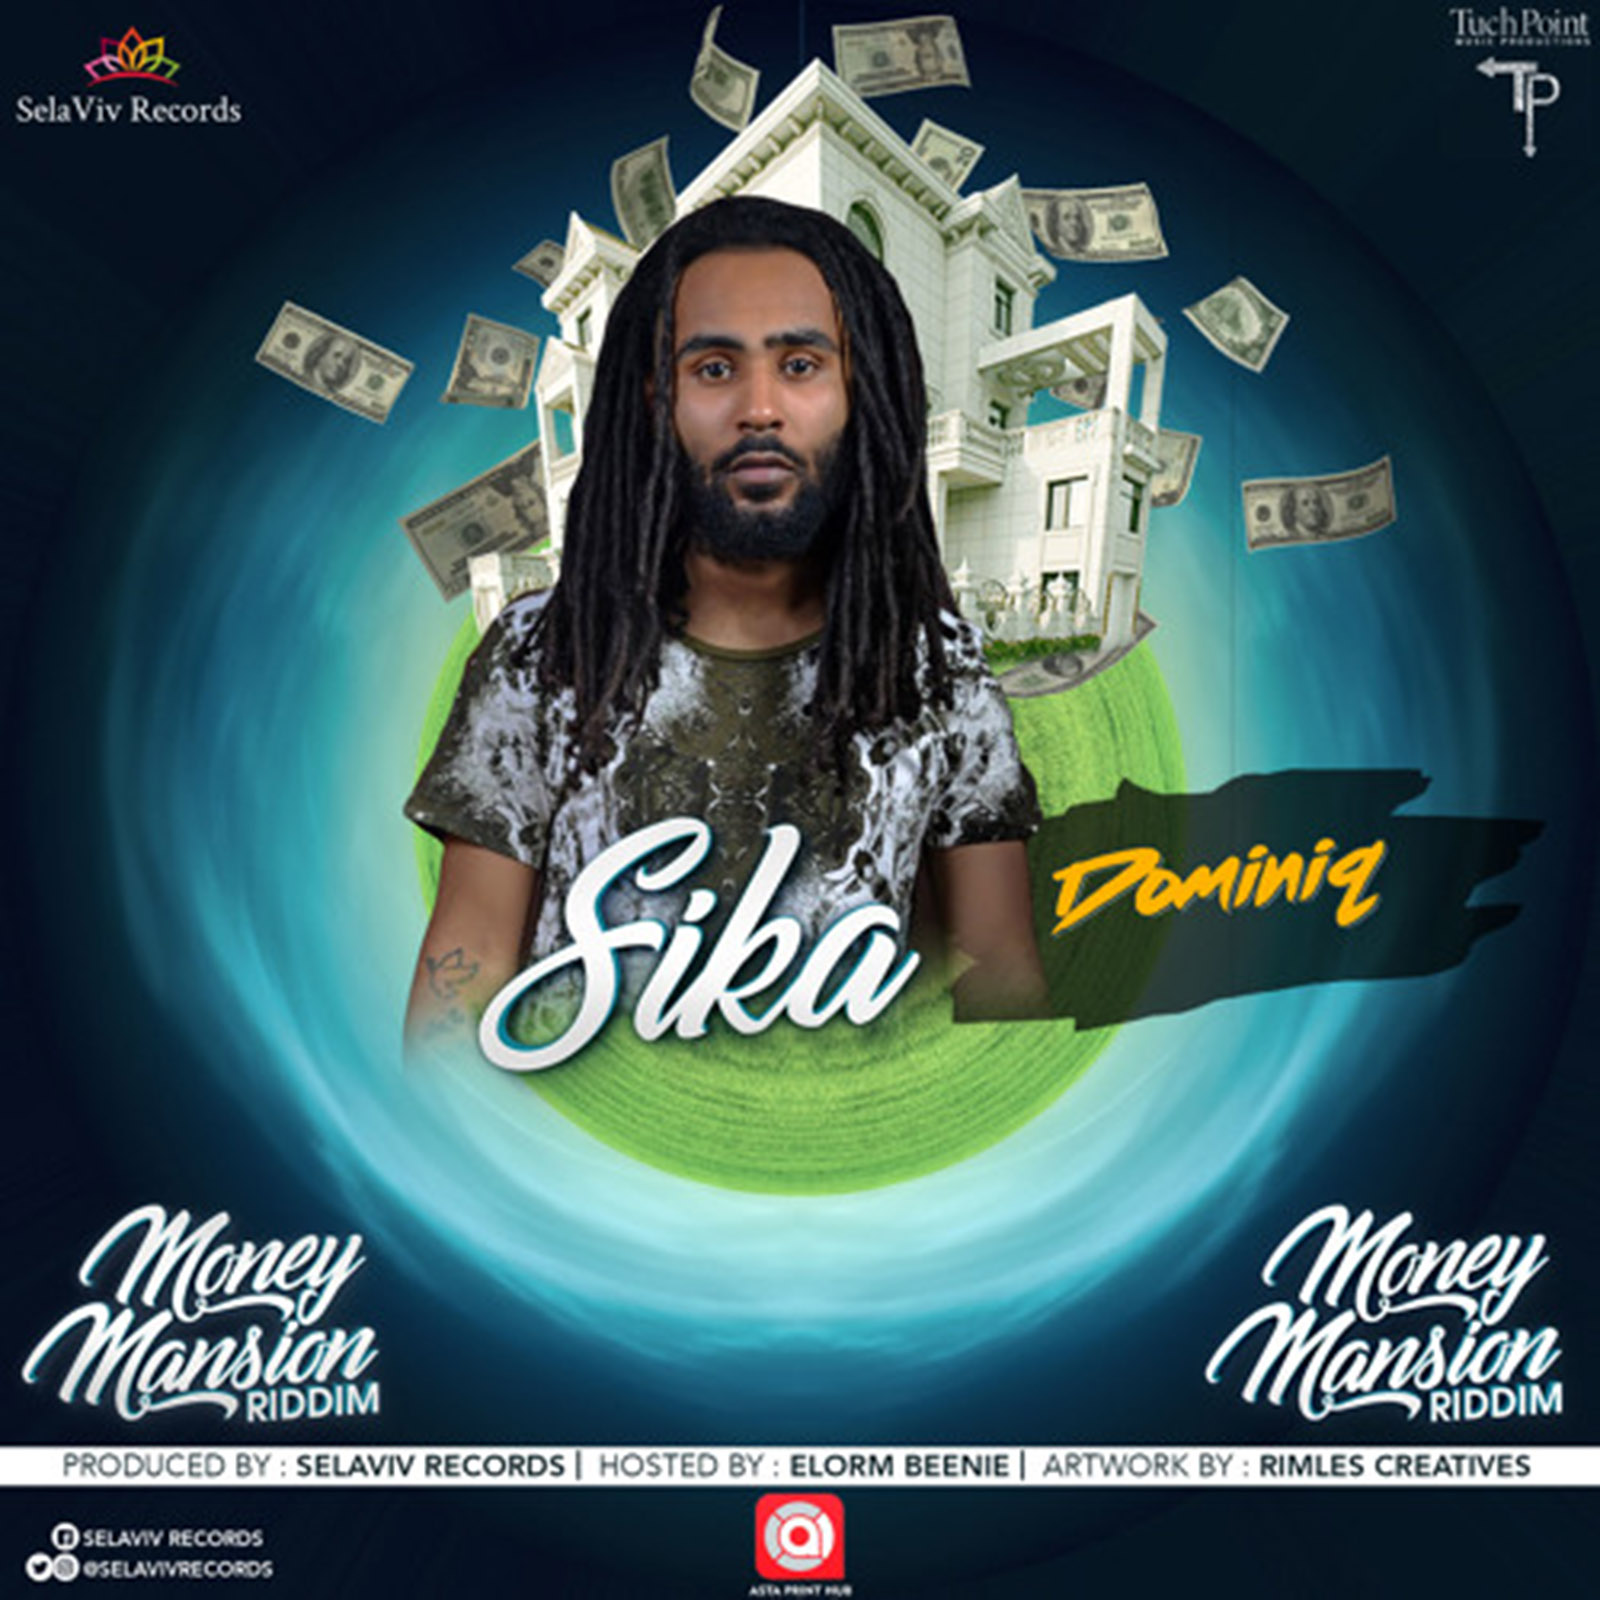 Sika (Money Mansion Riddim) by Dominiq